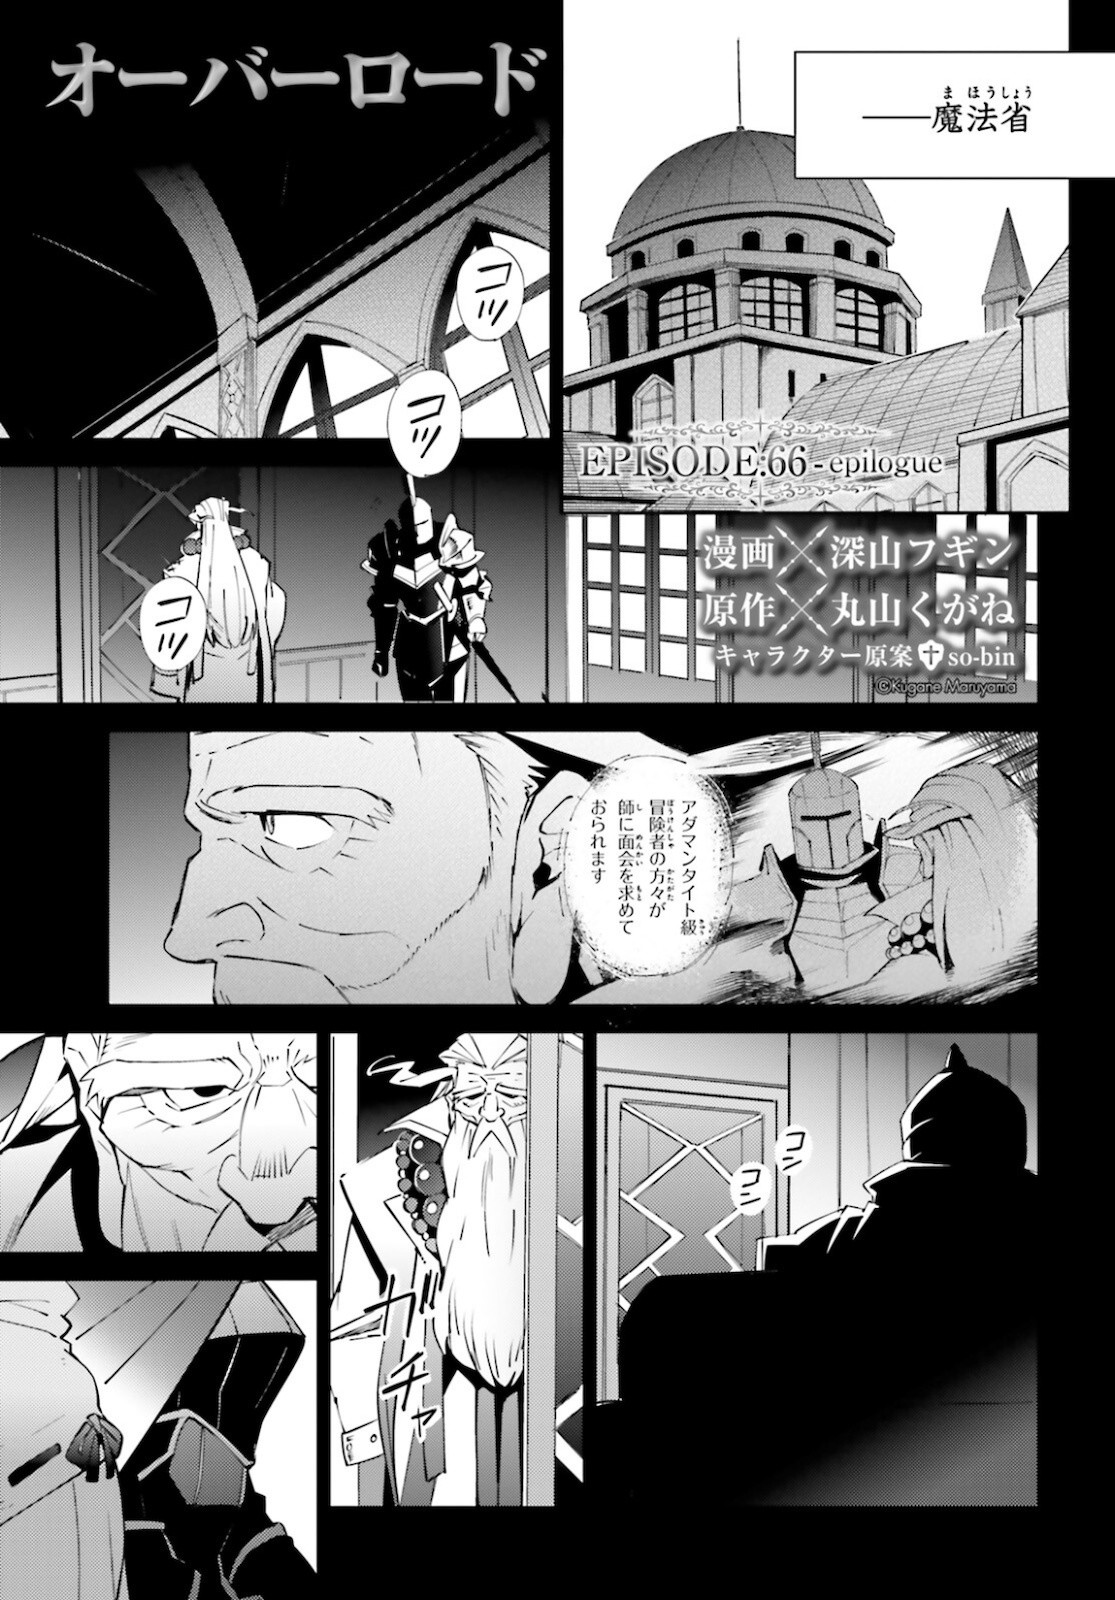 Overlord Chapter 66 5 Page 2 Raw Manga 生漫画